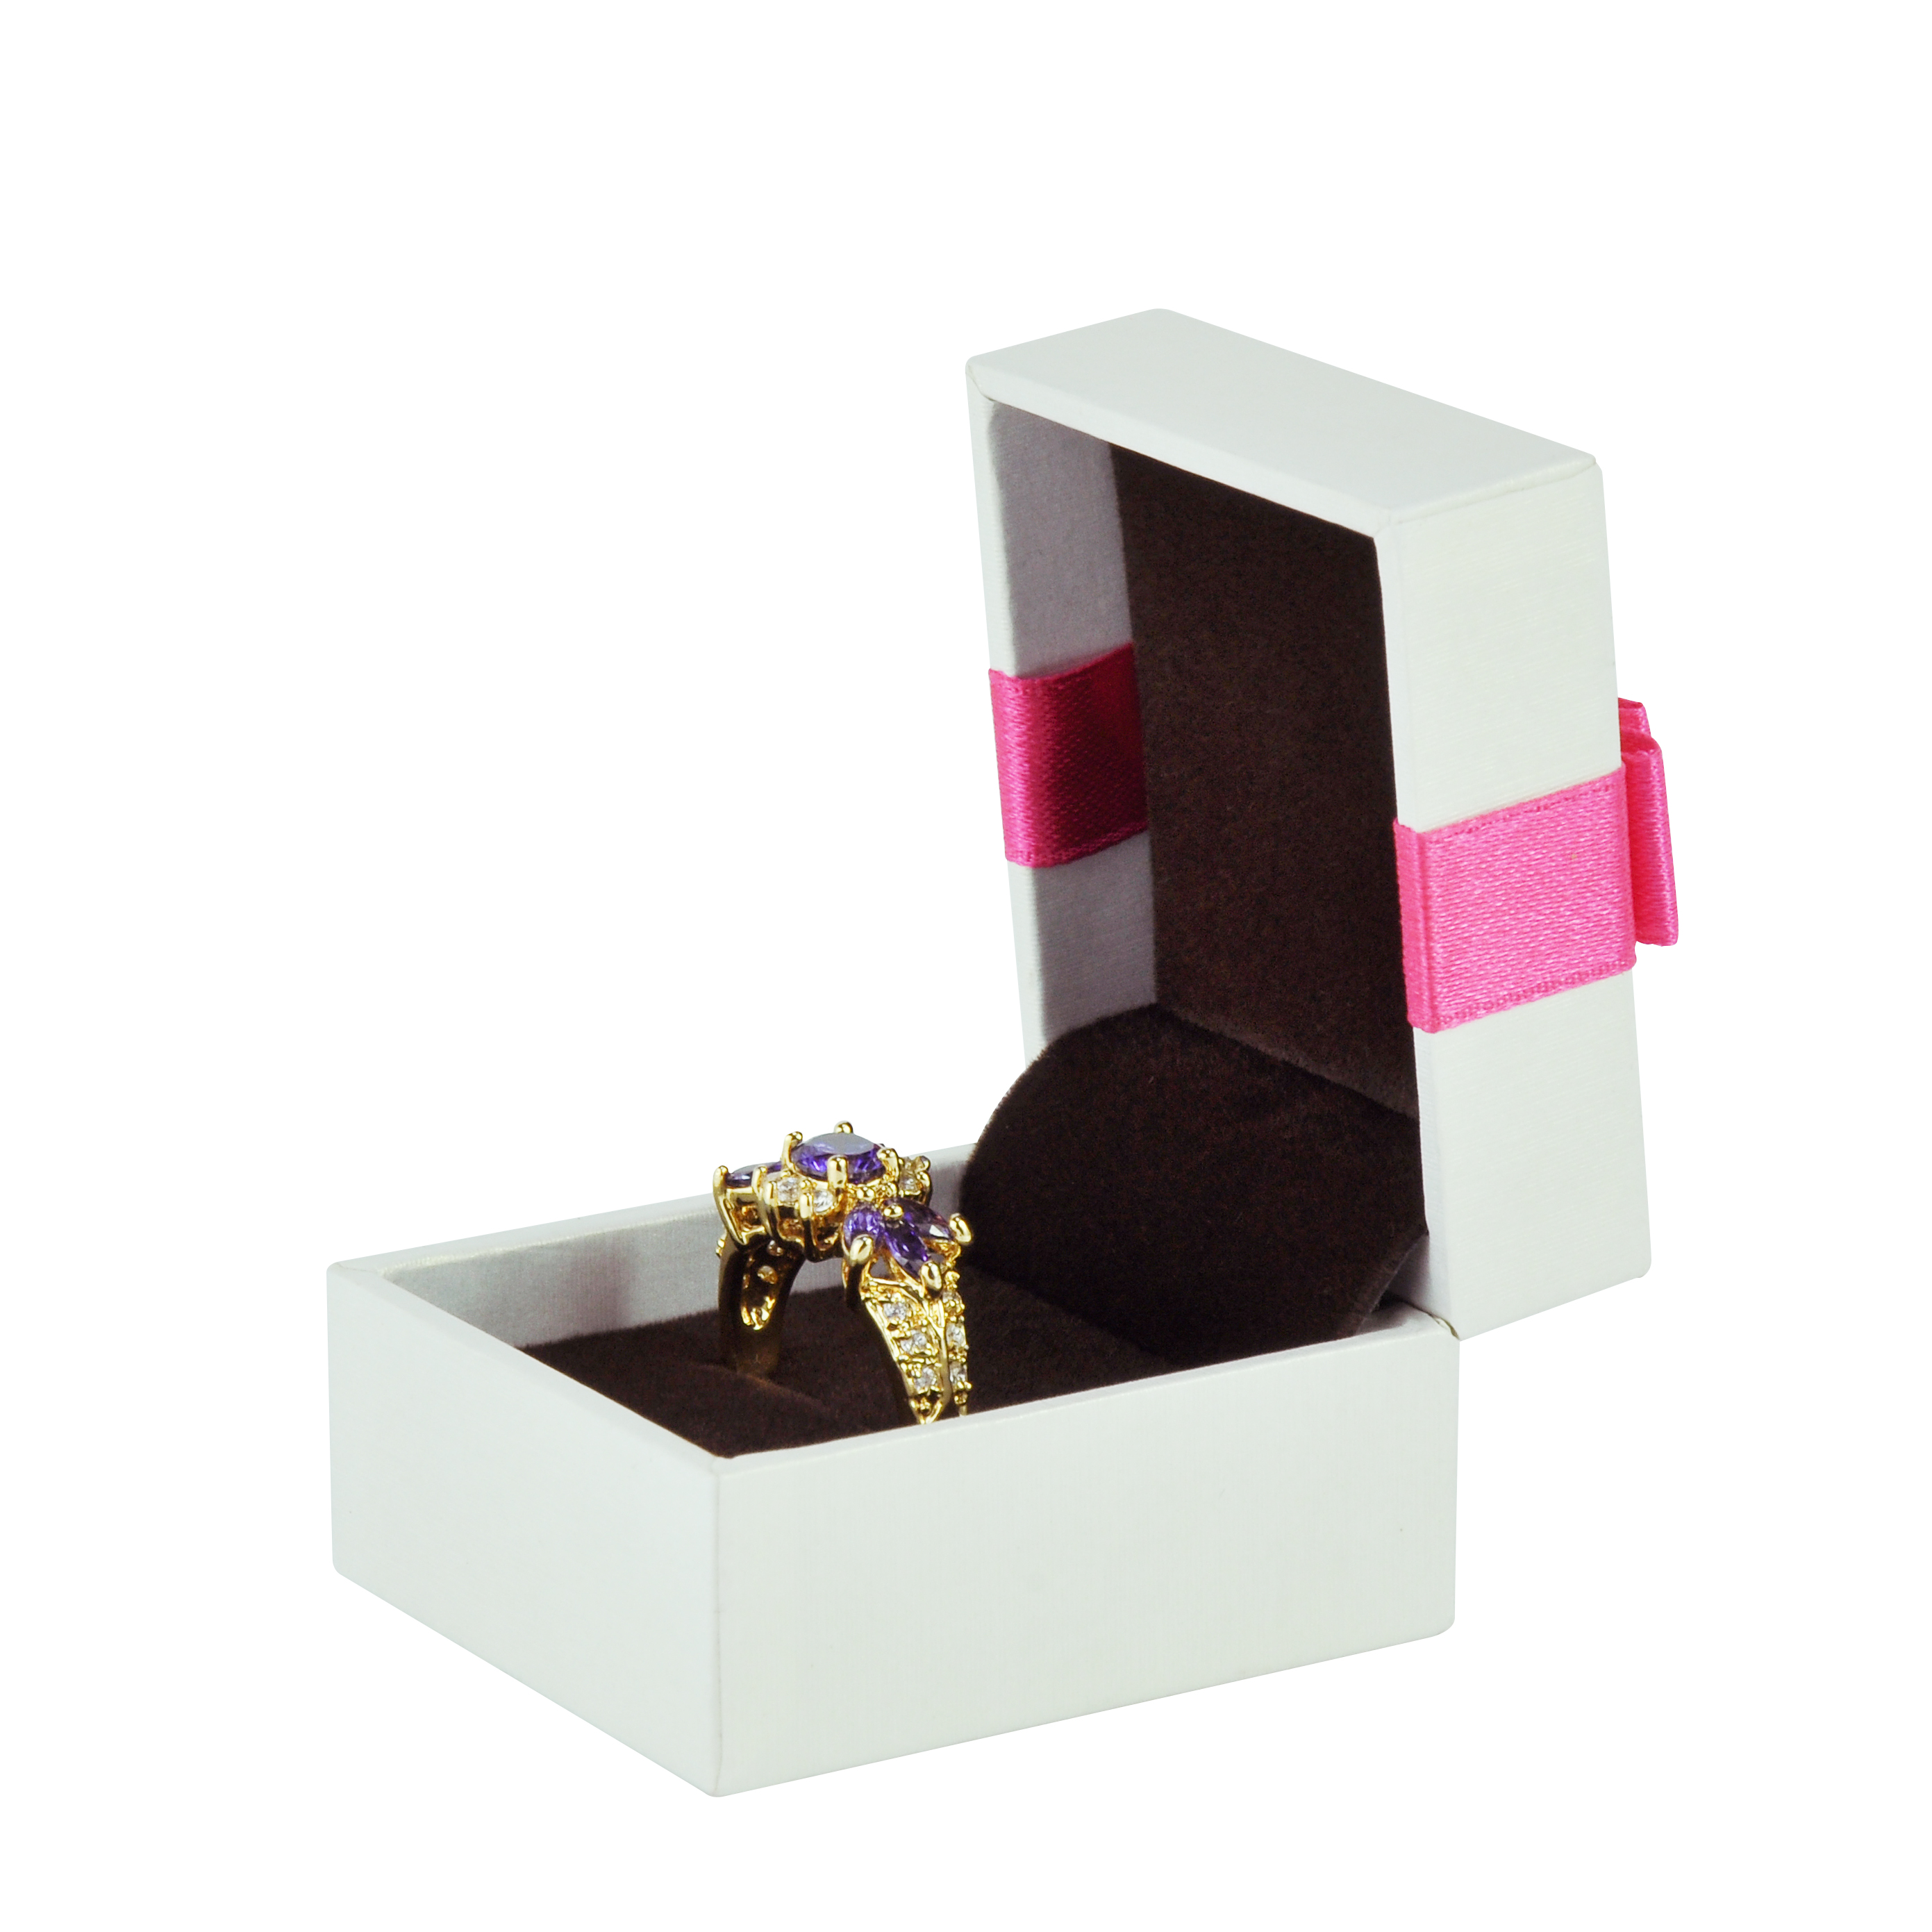 China Manufaktur Hochwertige Weiß Rosa Seidenband Schmuck Ring Armband Halskette Box